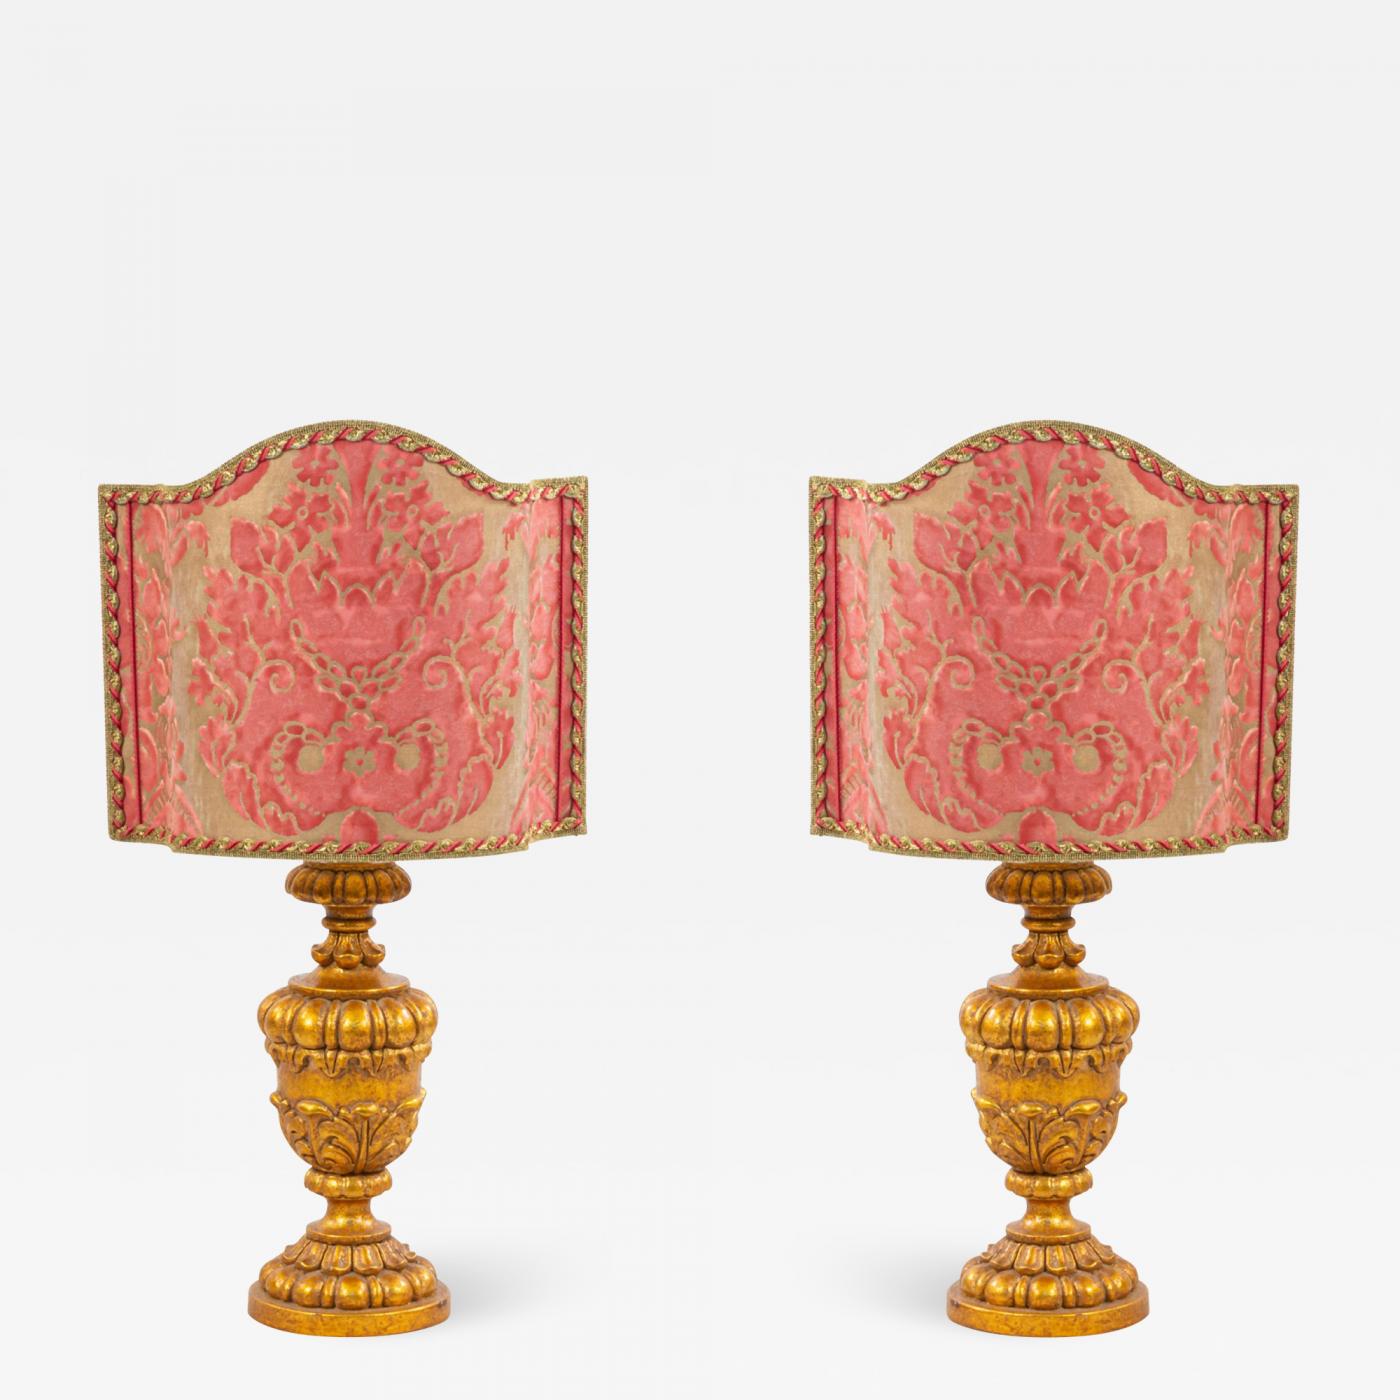 Pair of Italian Rococo Style Gilt Lamps